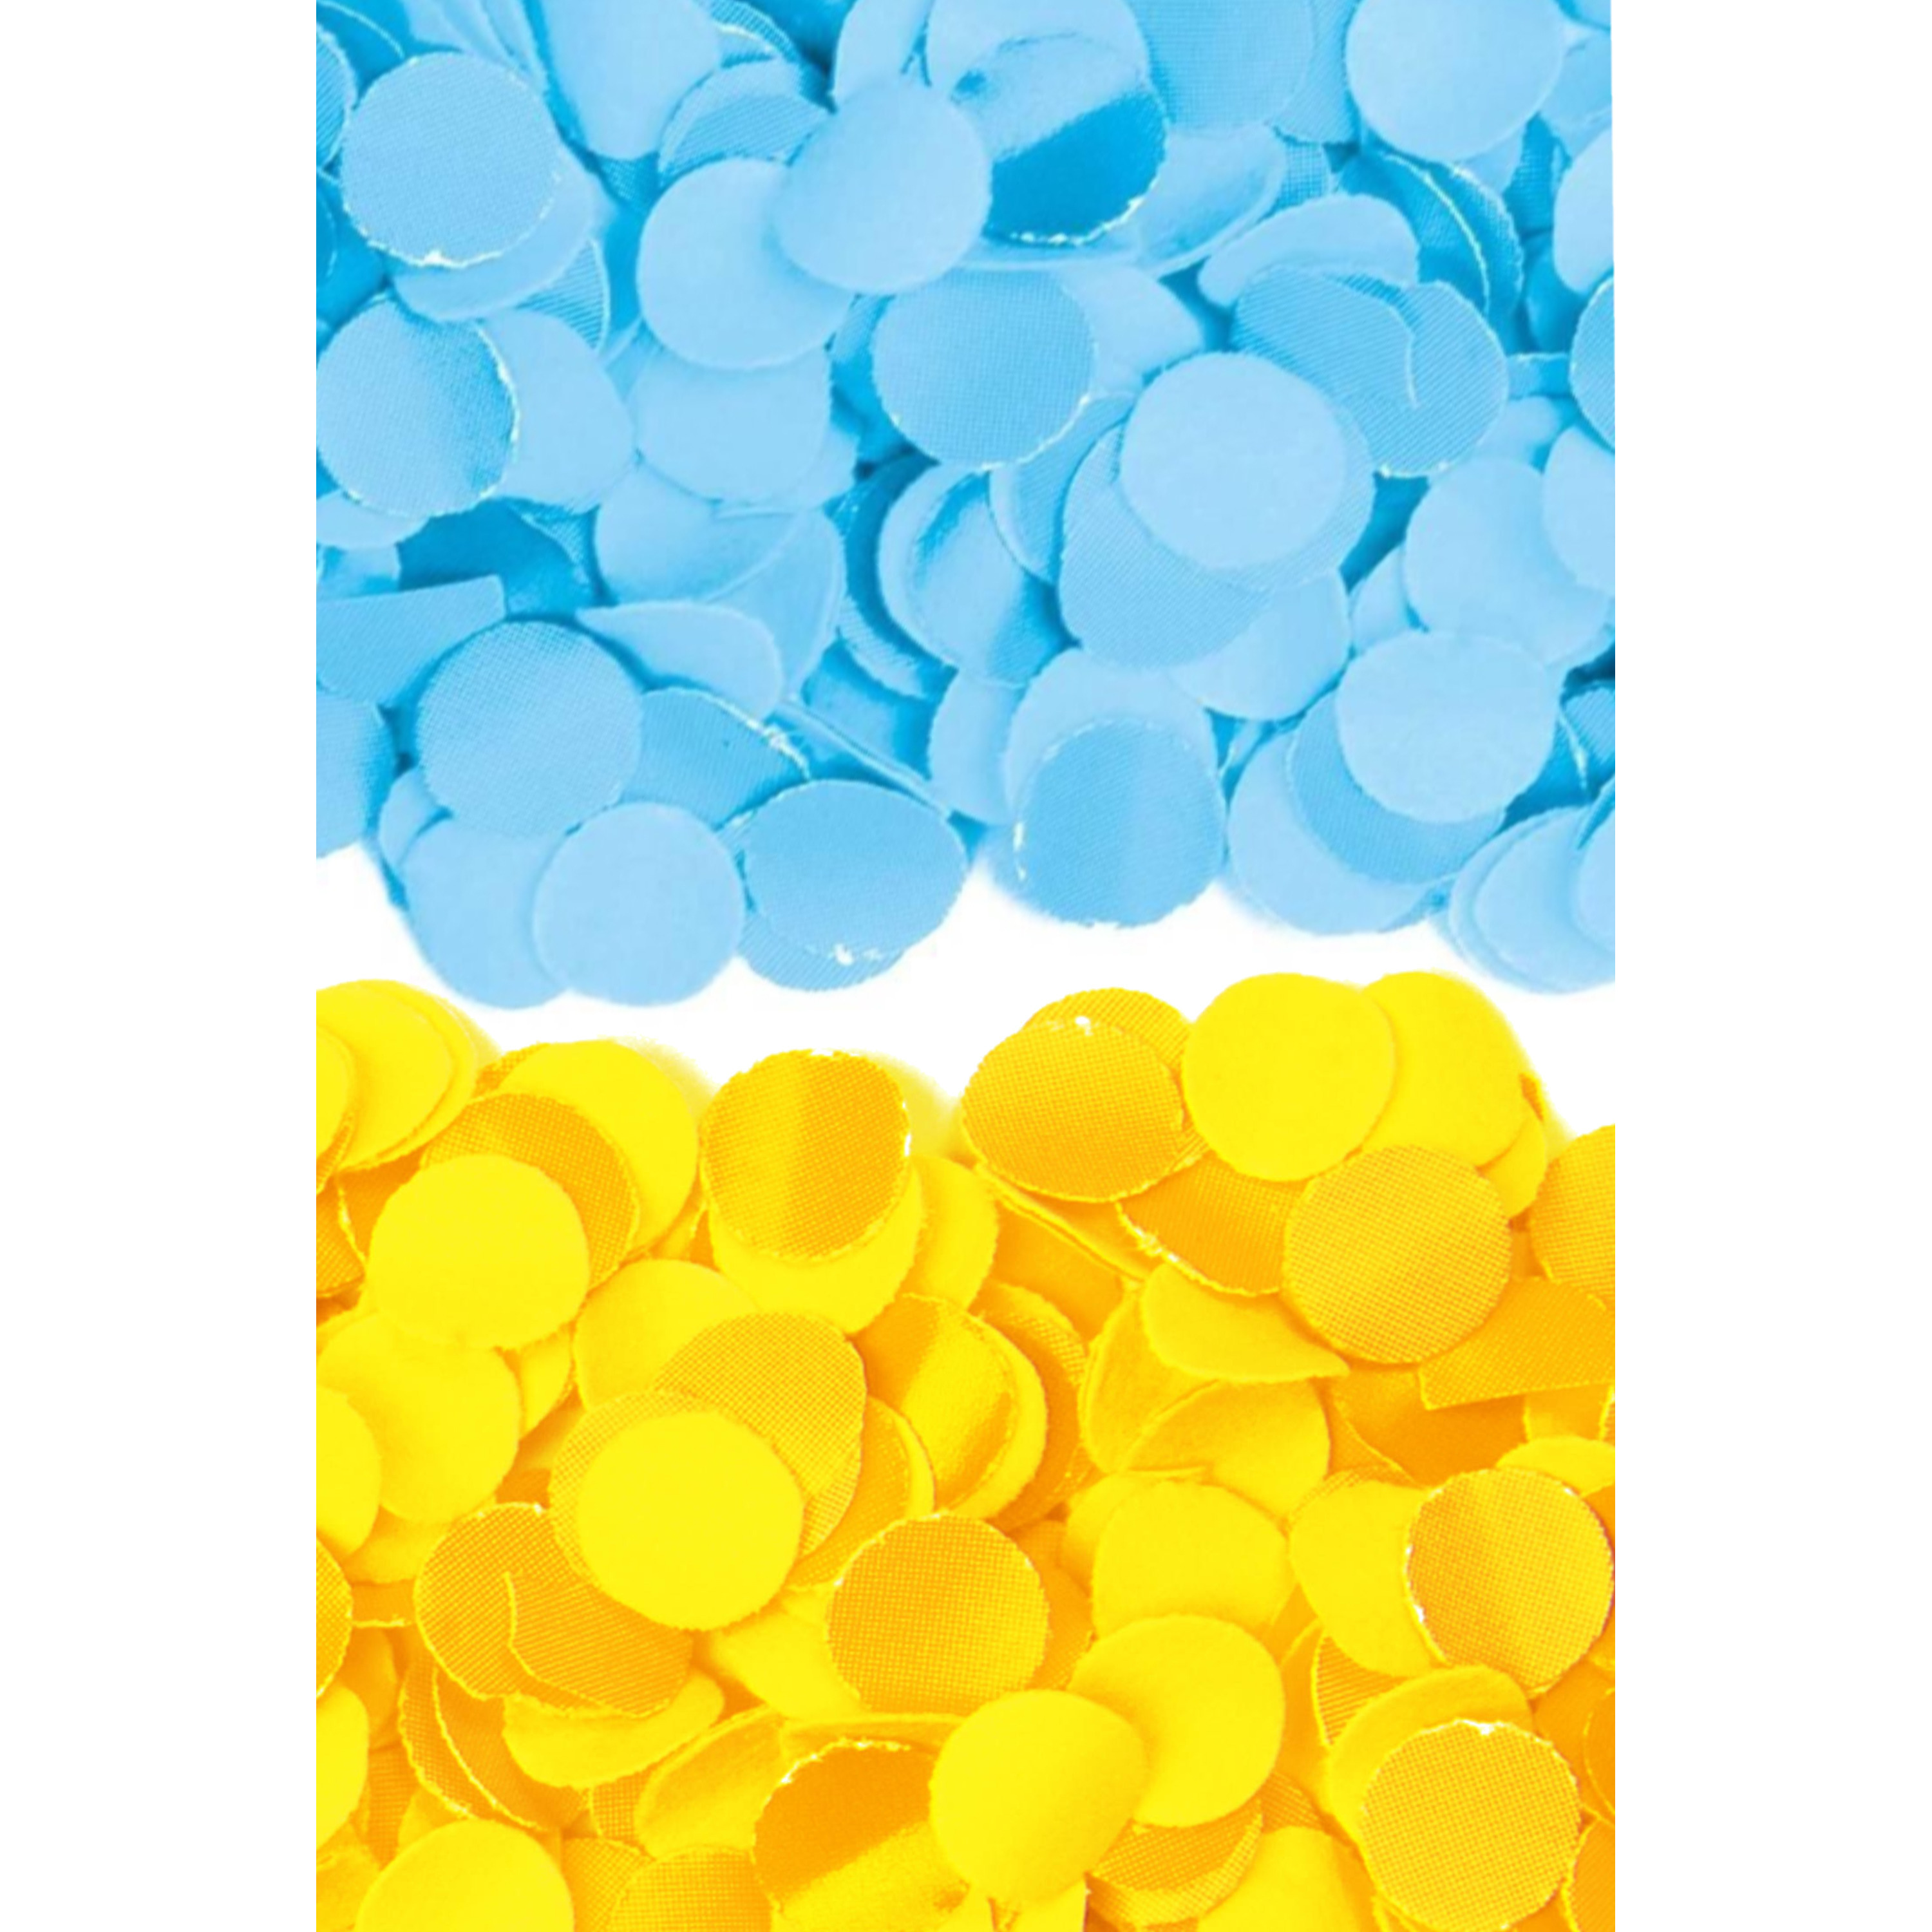 400 gram geel en blauwe papier snippers confetti mix set feest versiering -